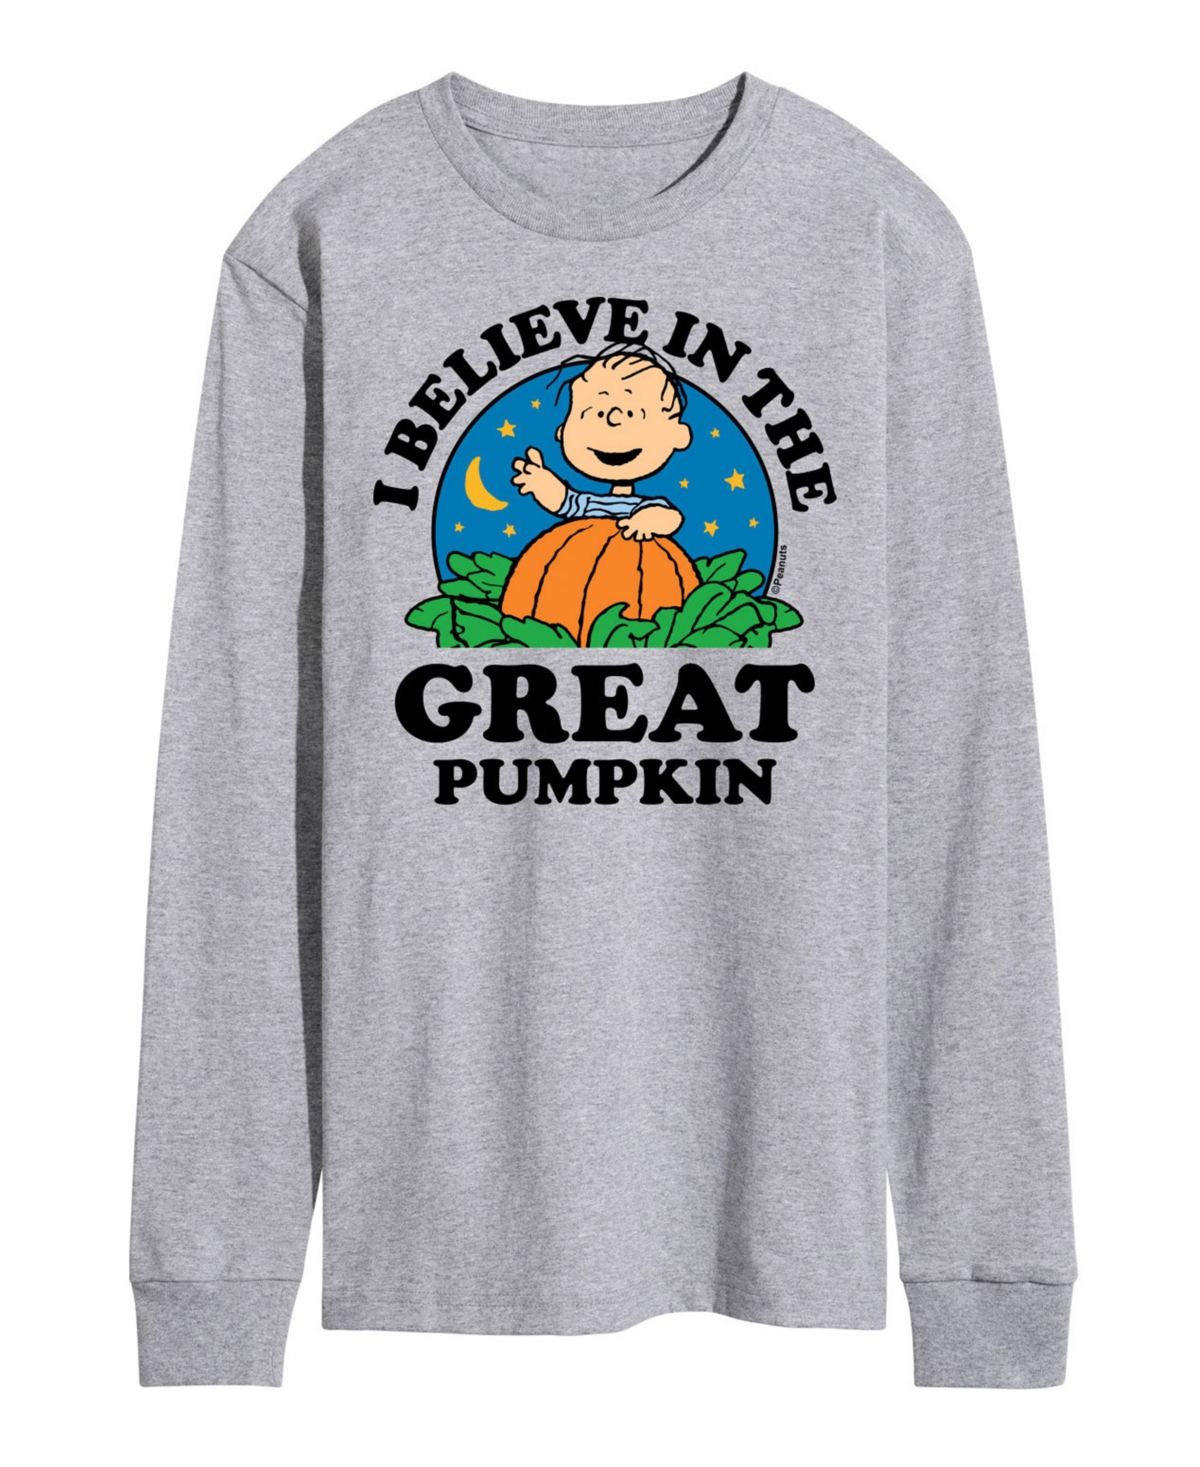 Airwaves Men's Peanuts Believe in Great Pumpkin T-shirt